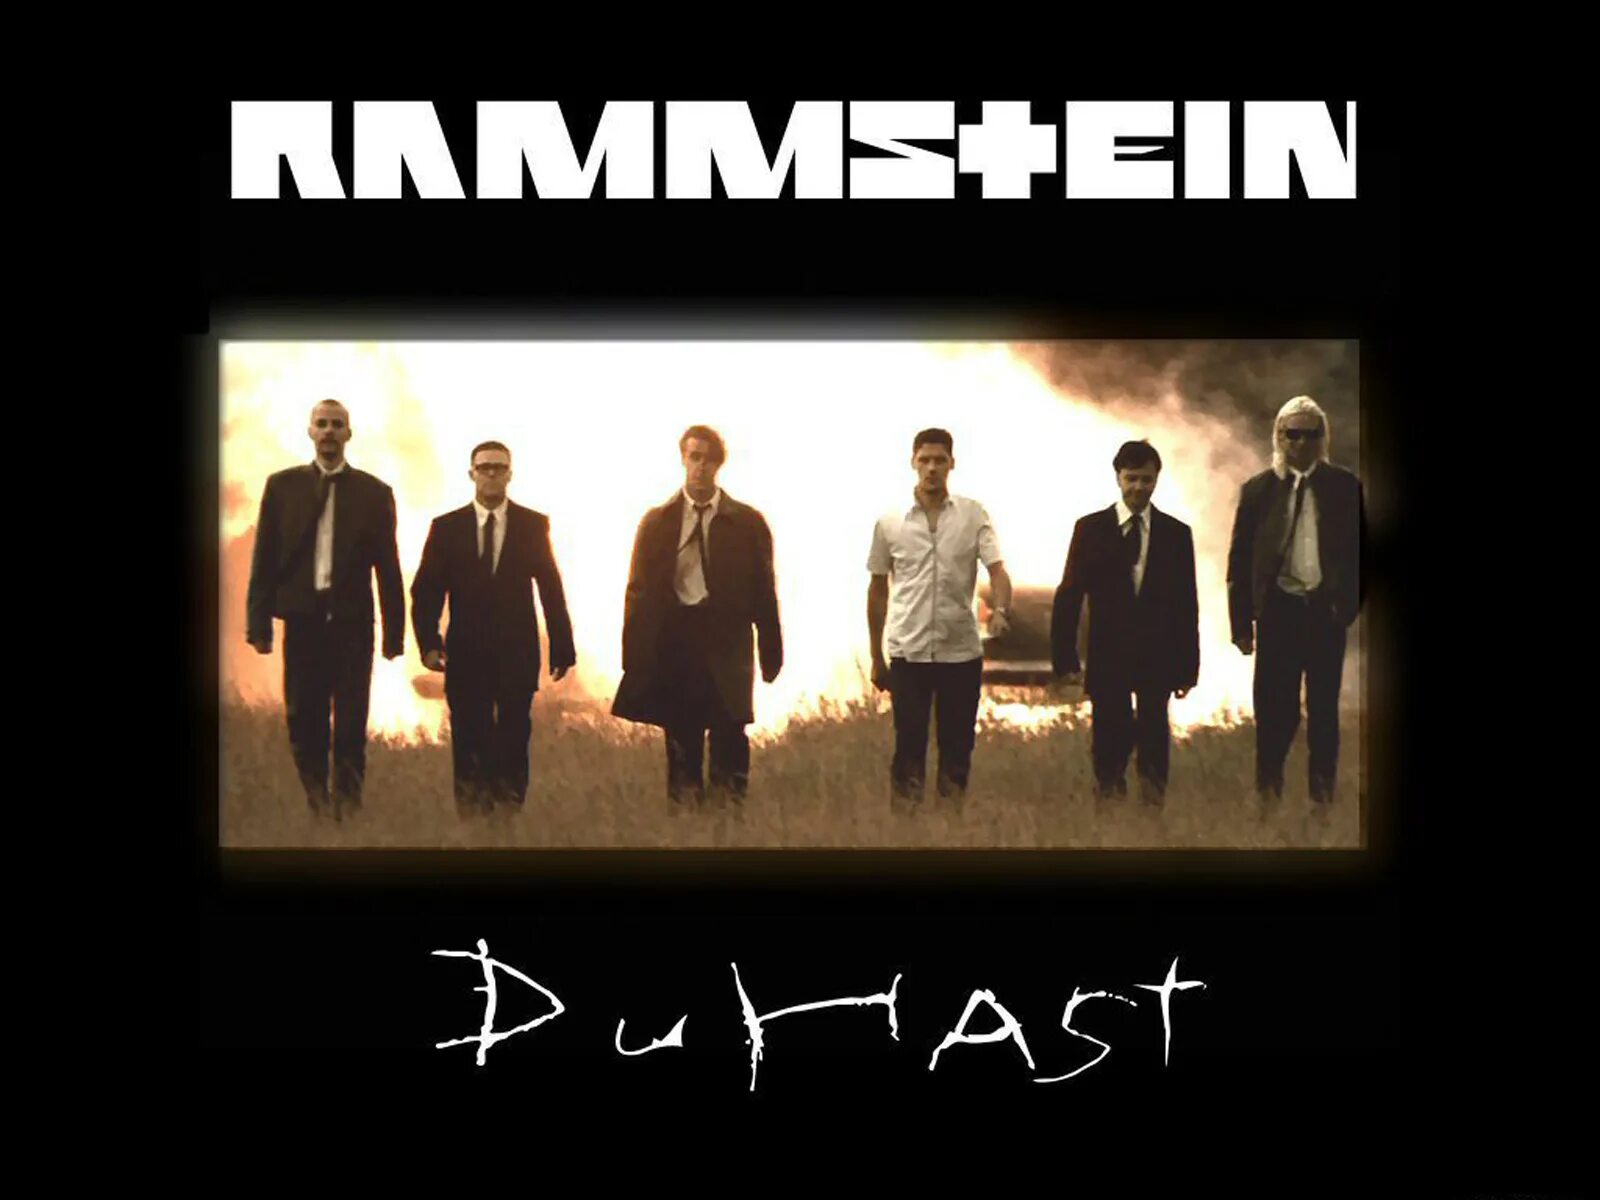 Текст песни рамштайн ду. Группа рамштайн духаст. Rammstein du hast обложка. Рамштайн Ду. Rammstein du hast.